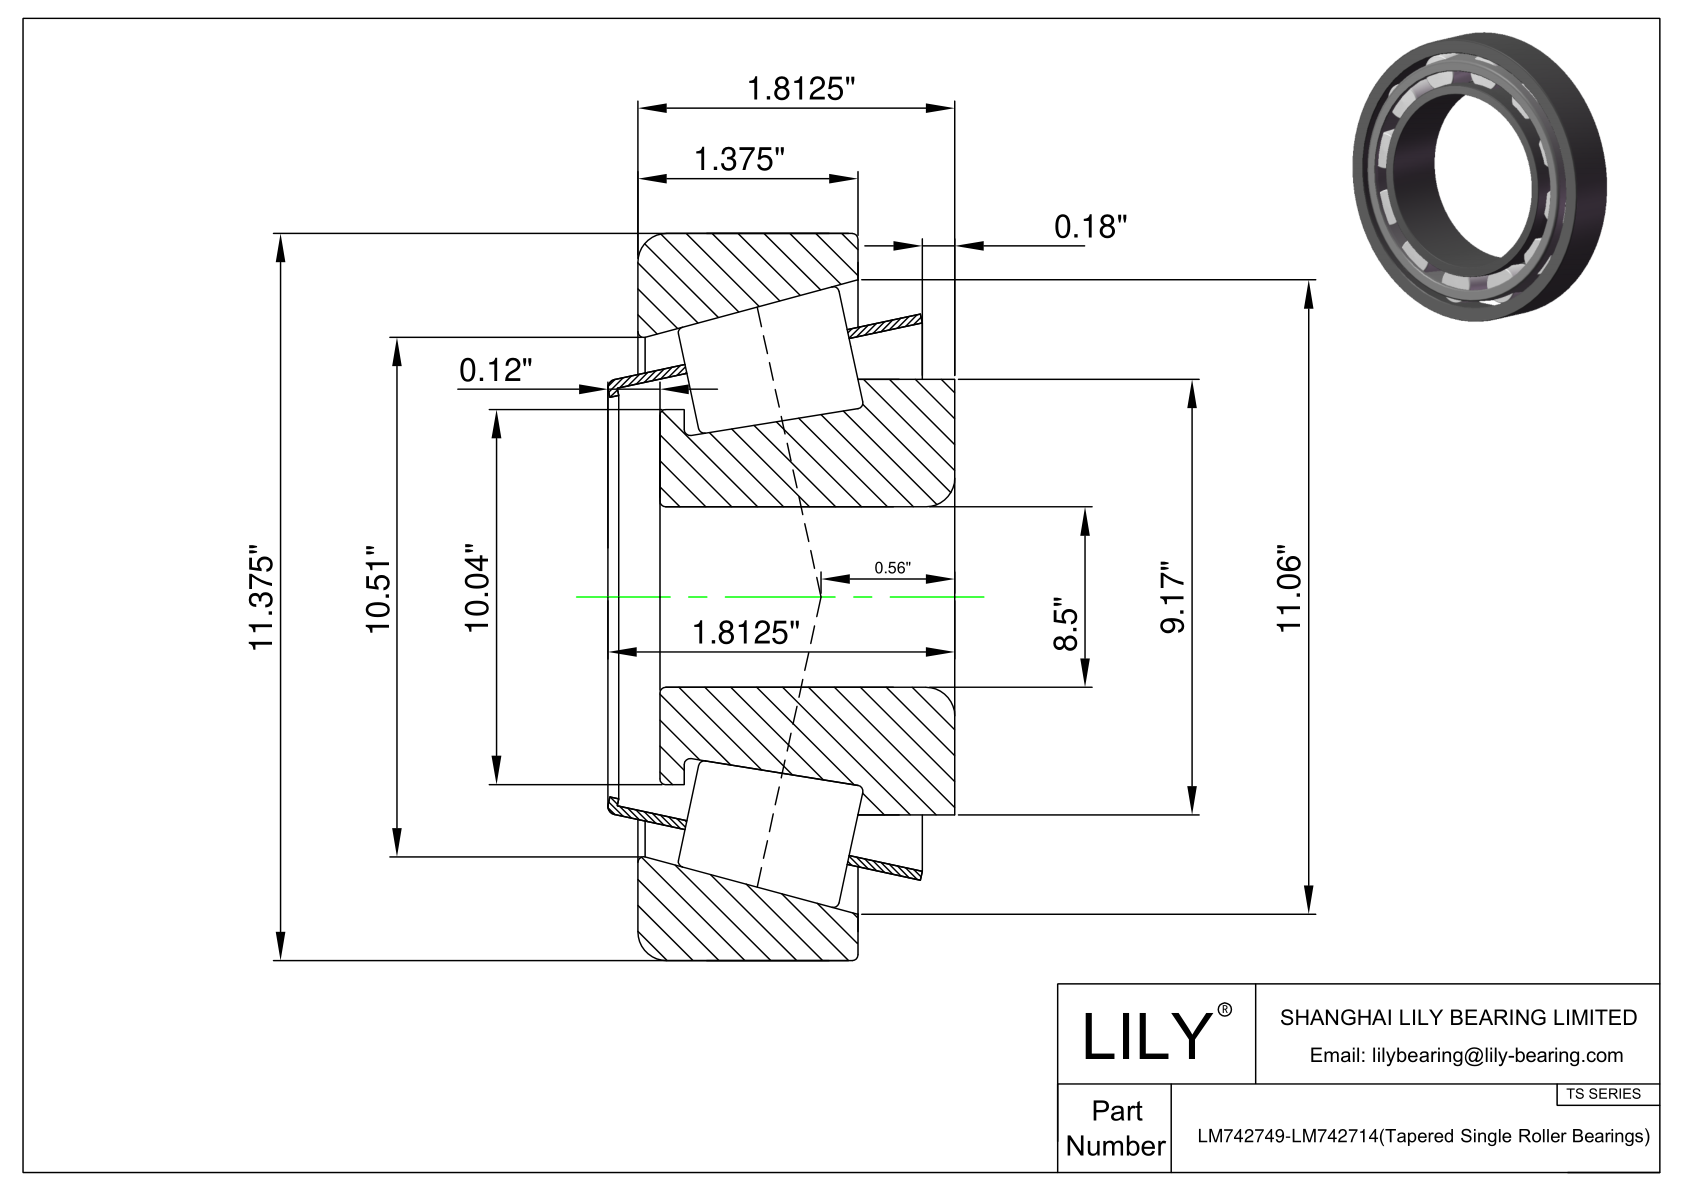 LM742749-LM742714 TS系列(圆锥单滚子轴承)(英制) CAD图形